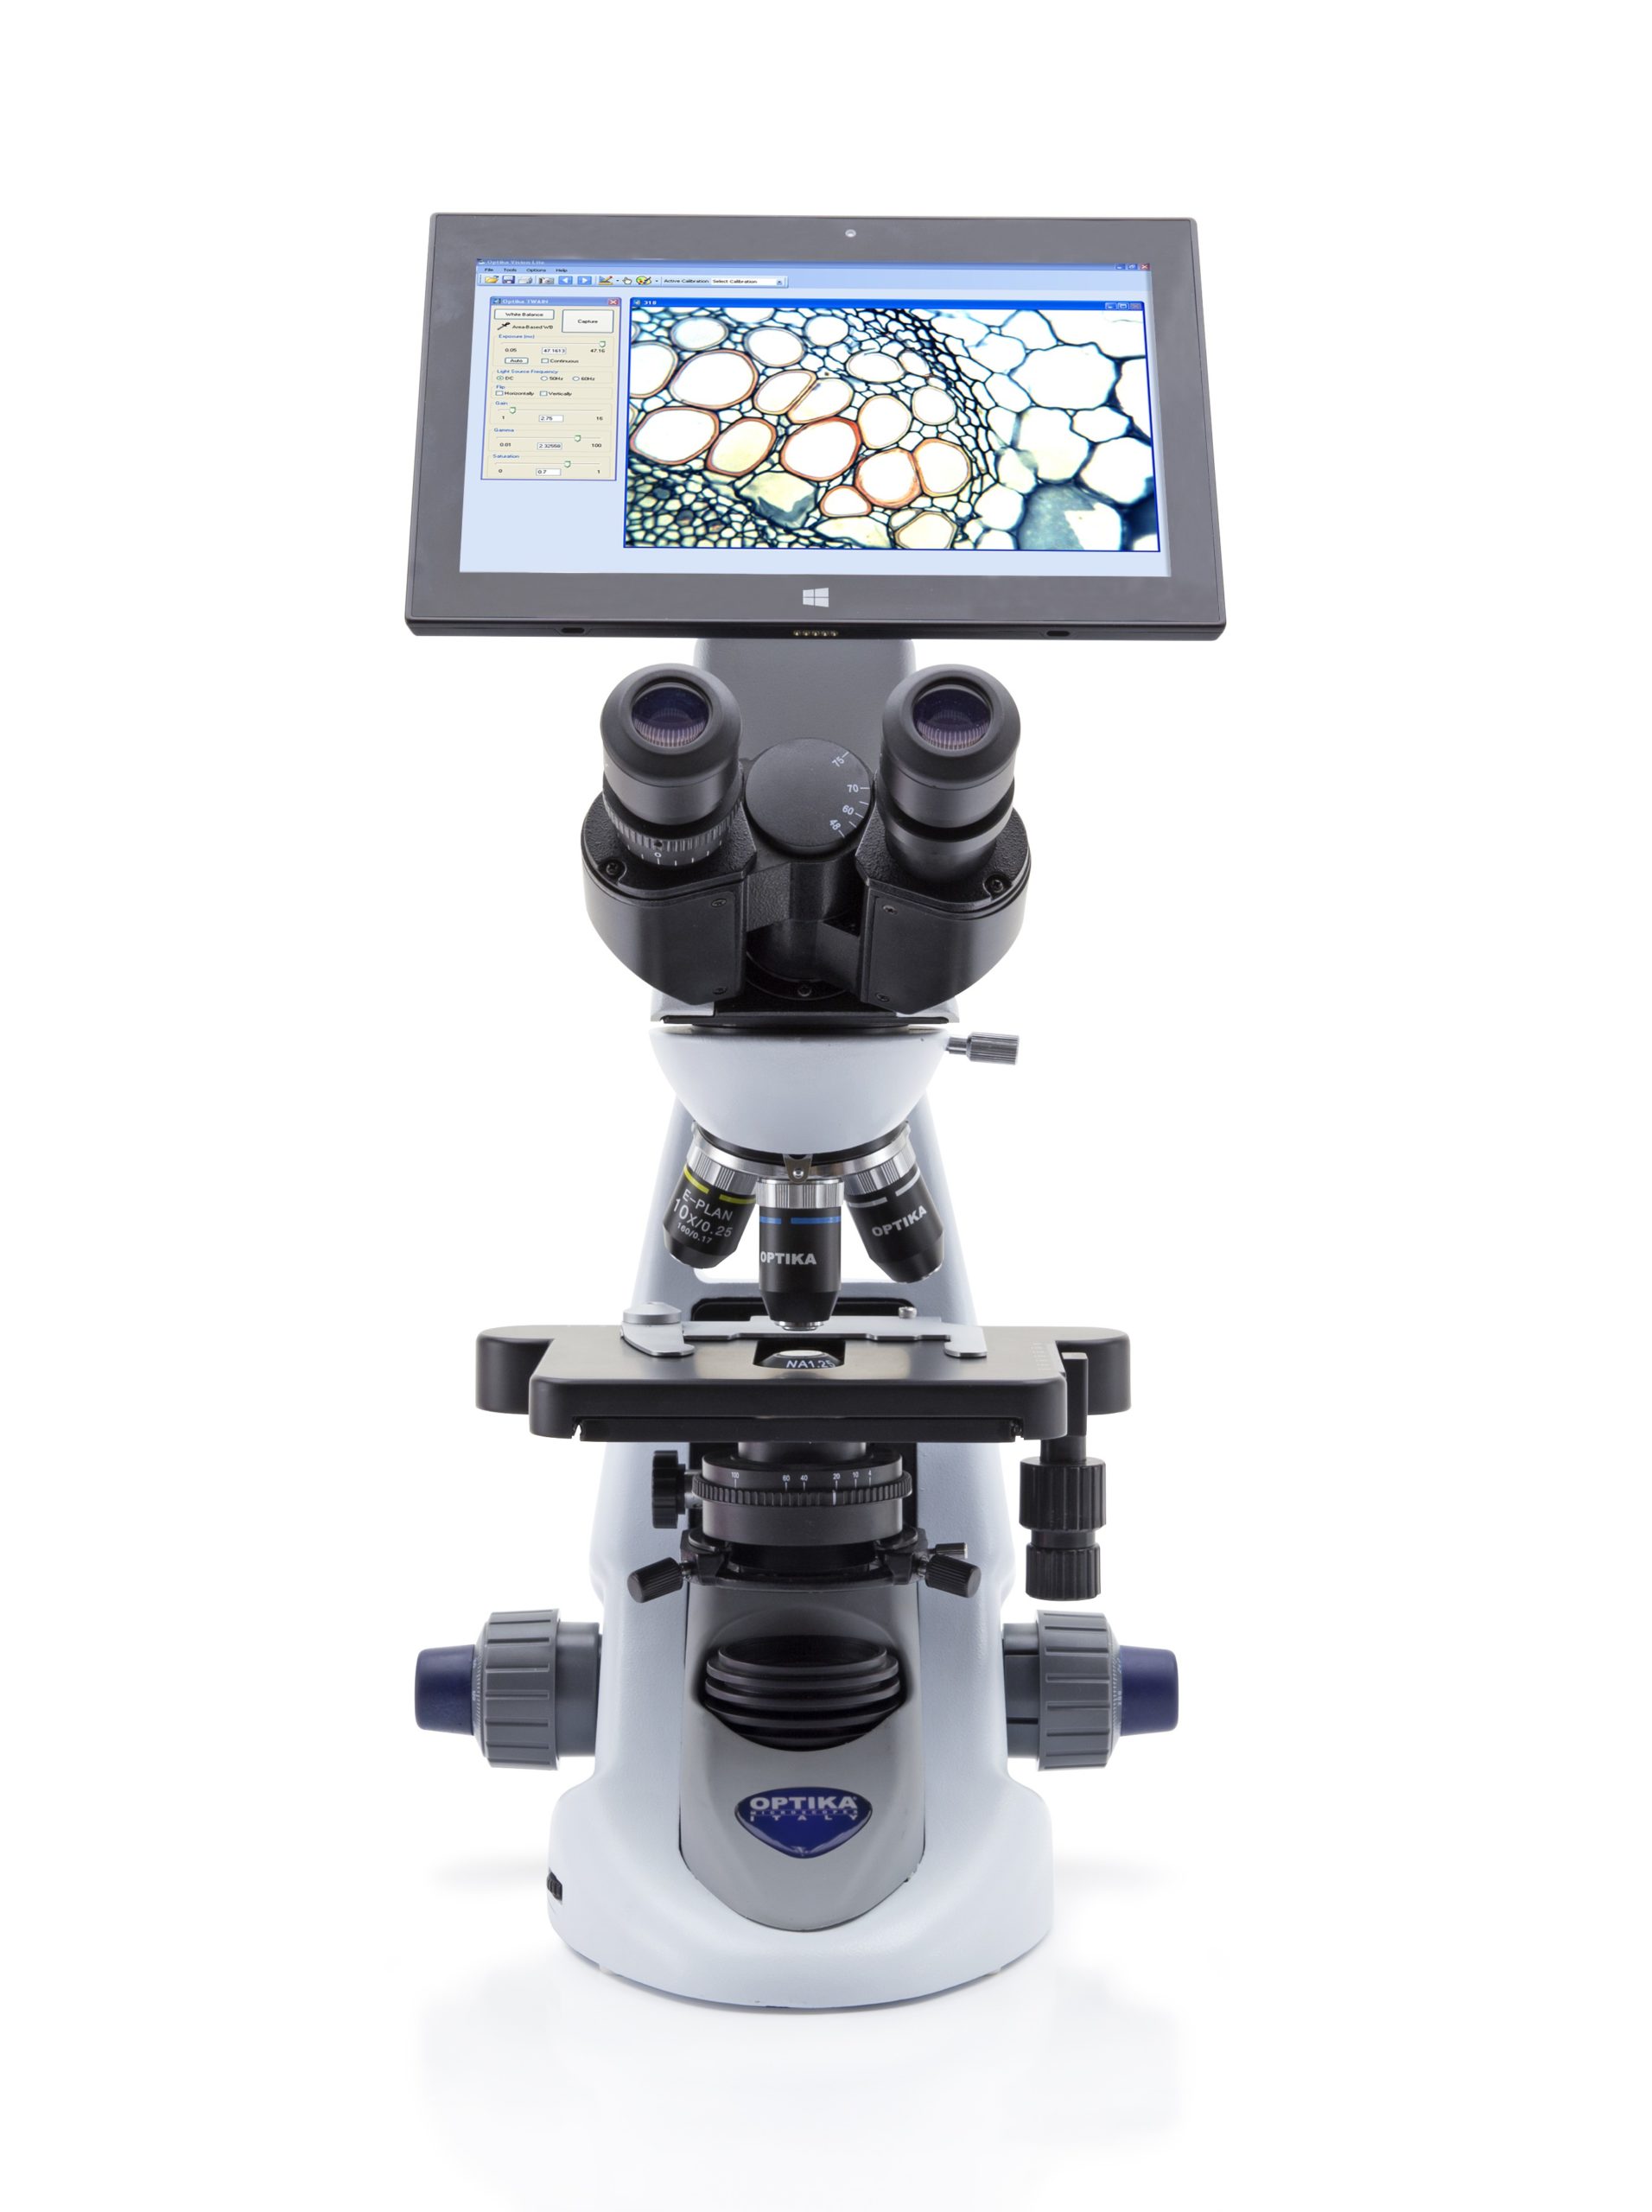 1 прибор типа микроскопа. Цифровой микроскоп бинокулярный. Цифровой микроскоп бинокулярный (с камерой). Optika b-190tb. Бинокулярный микроскоп цифровой модели NLCD-307b.